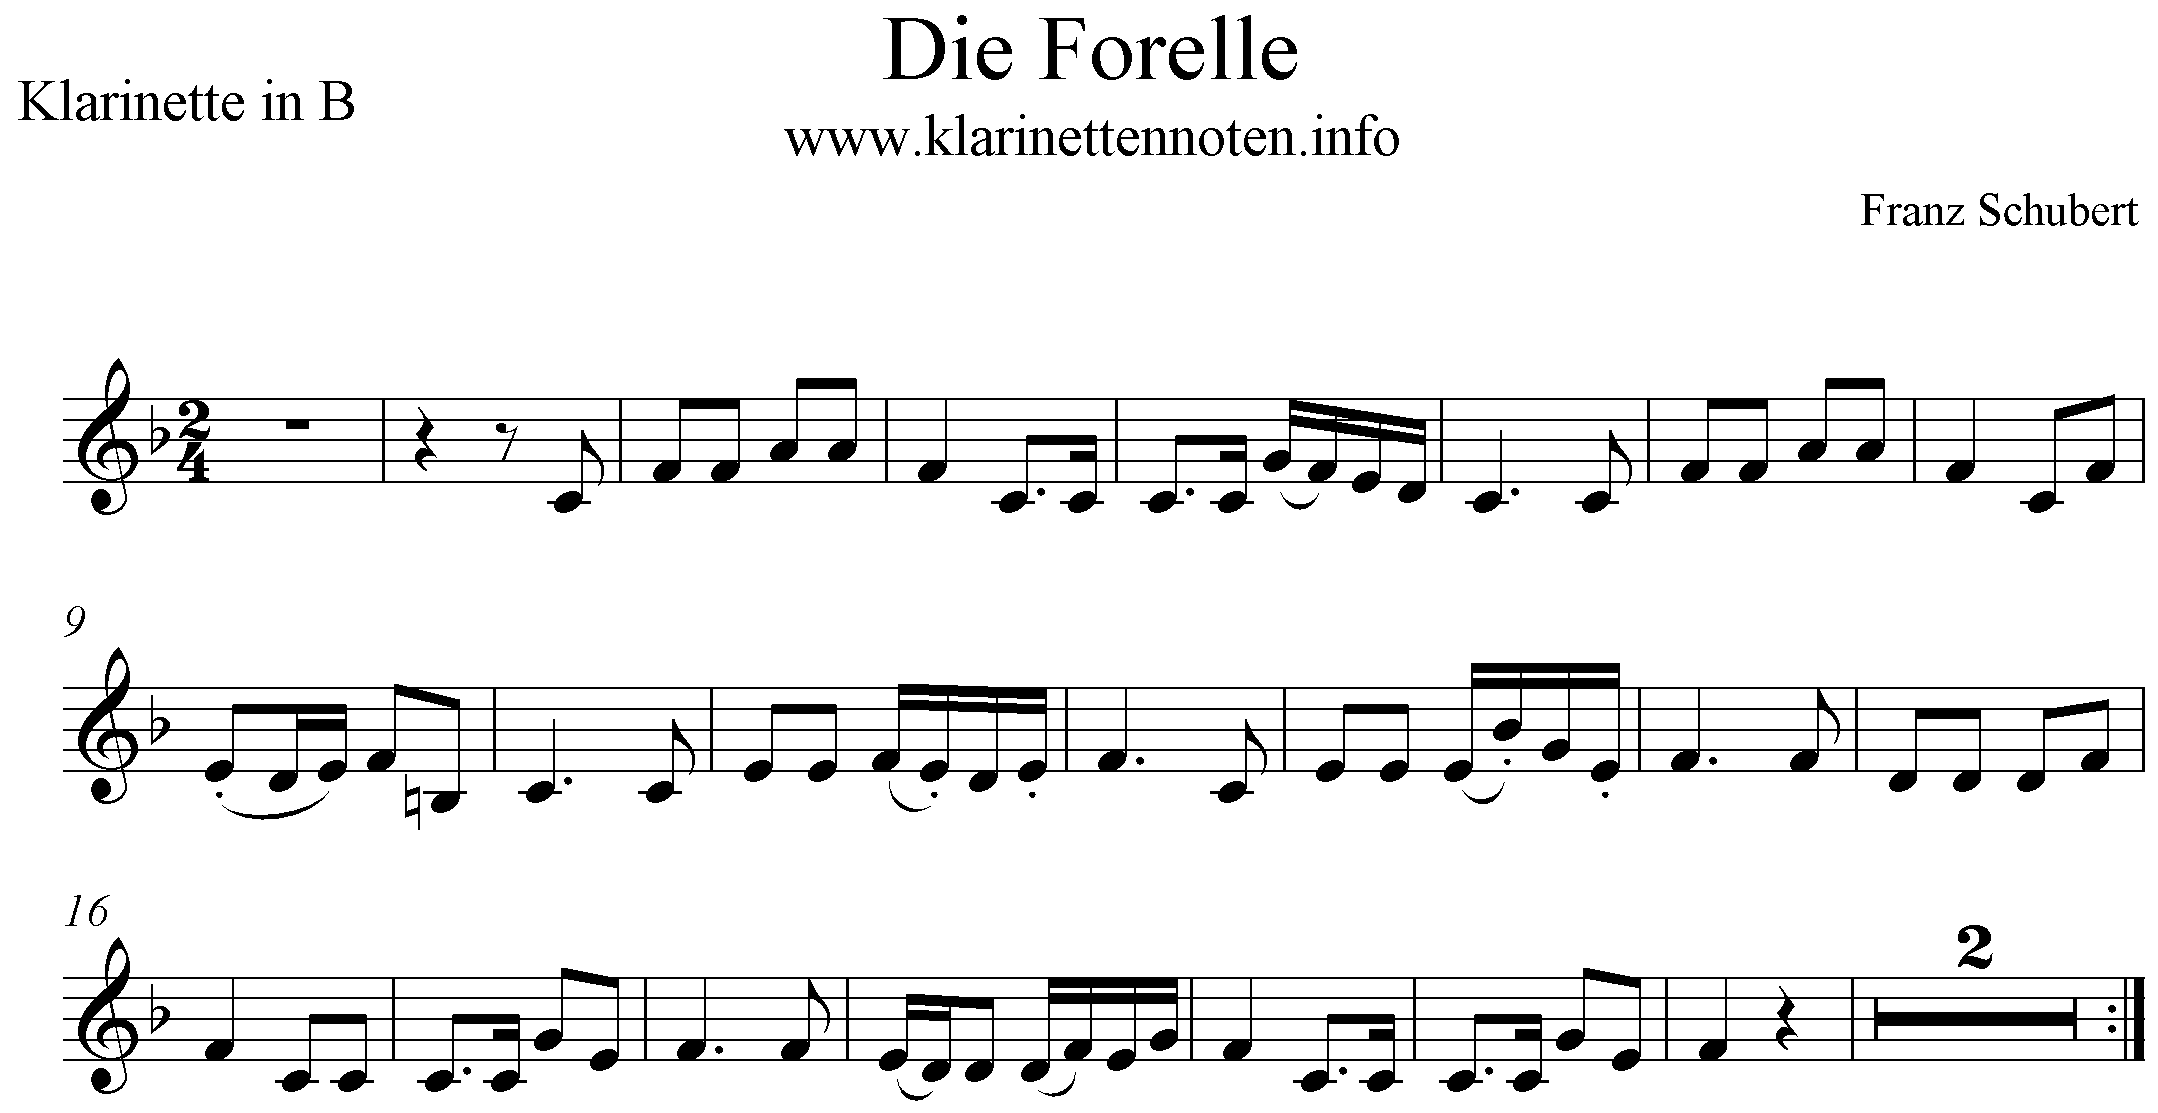 Die Forelle freesheet for Clarinet, Noten Klarinette